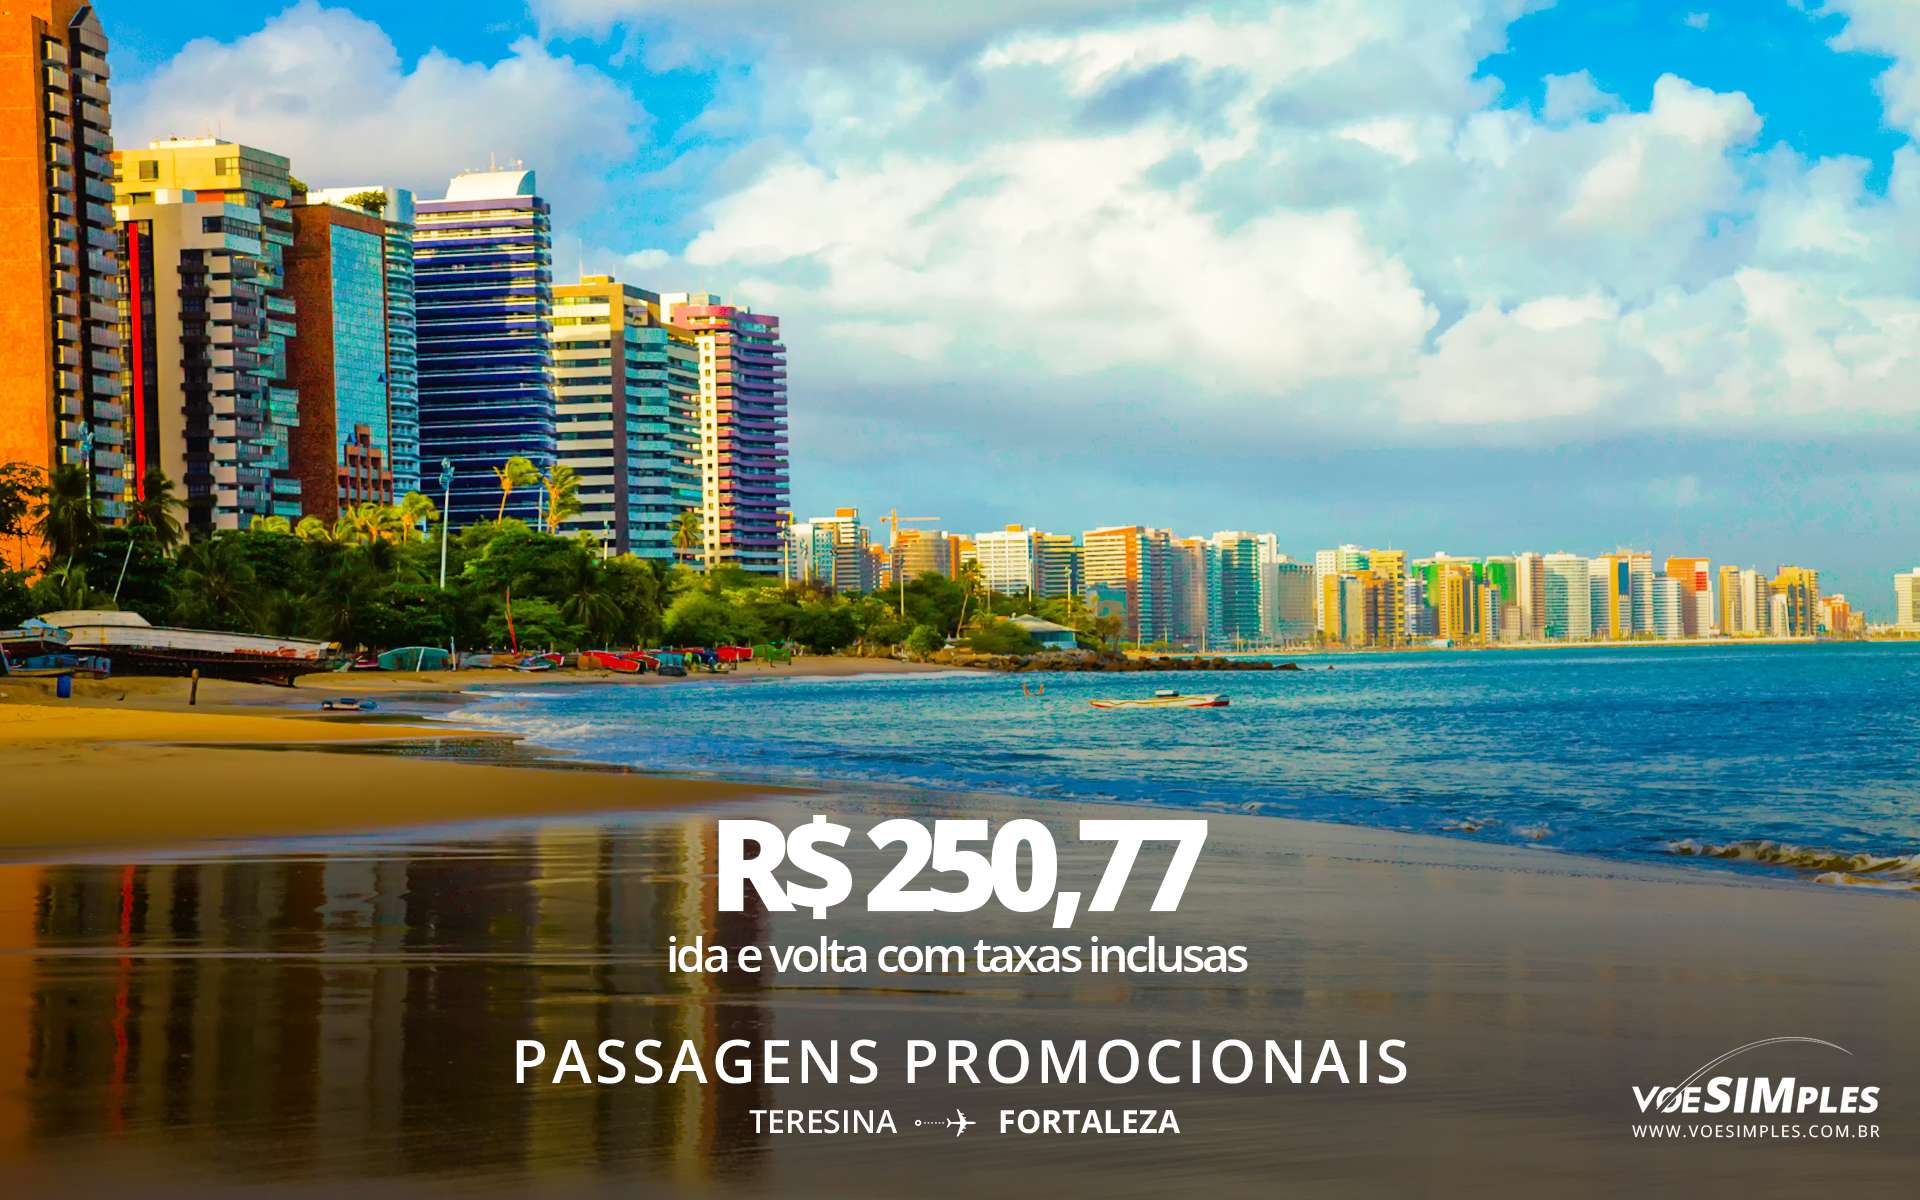 passagem-aerea-promocional-latam-teresina-fortaleza-brasil-america-sul-voe-simples-promo-sdfull